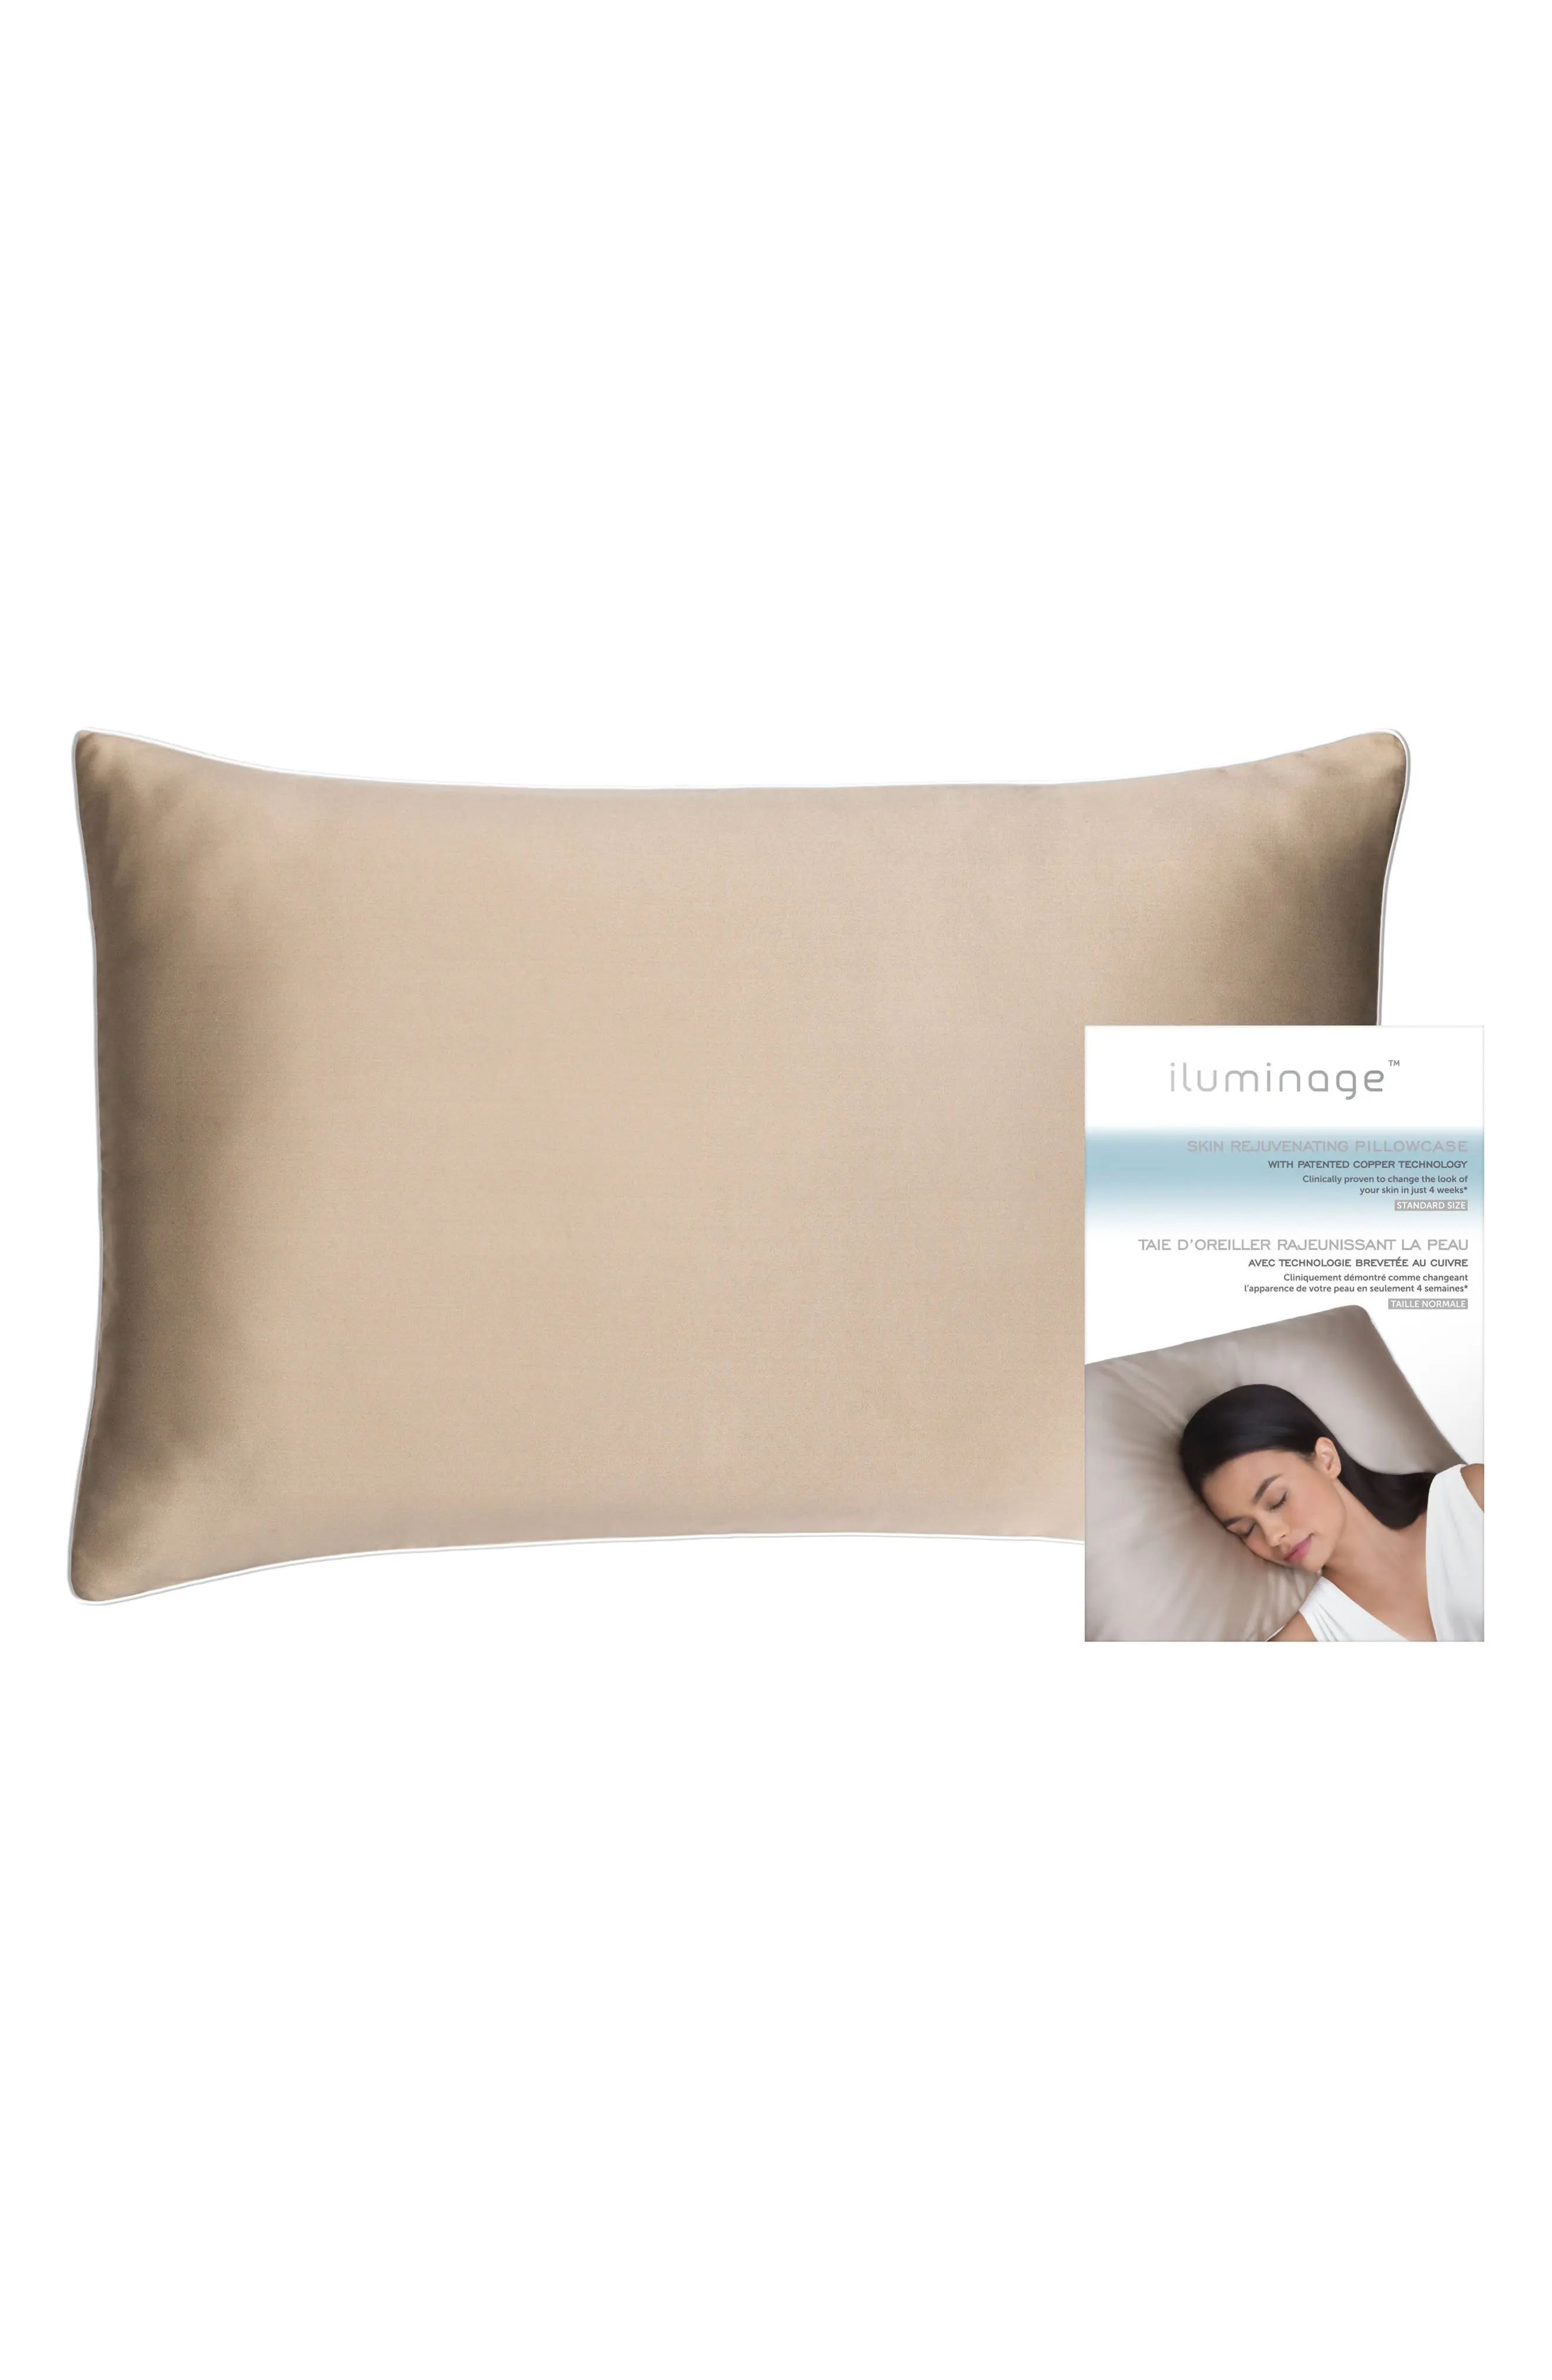 iluminage Skin Rejuvenating Pillowcase | Nordstrom